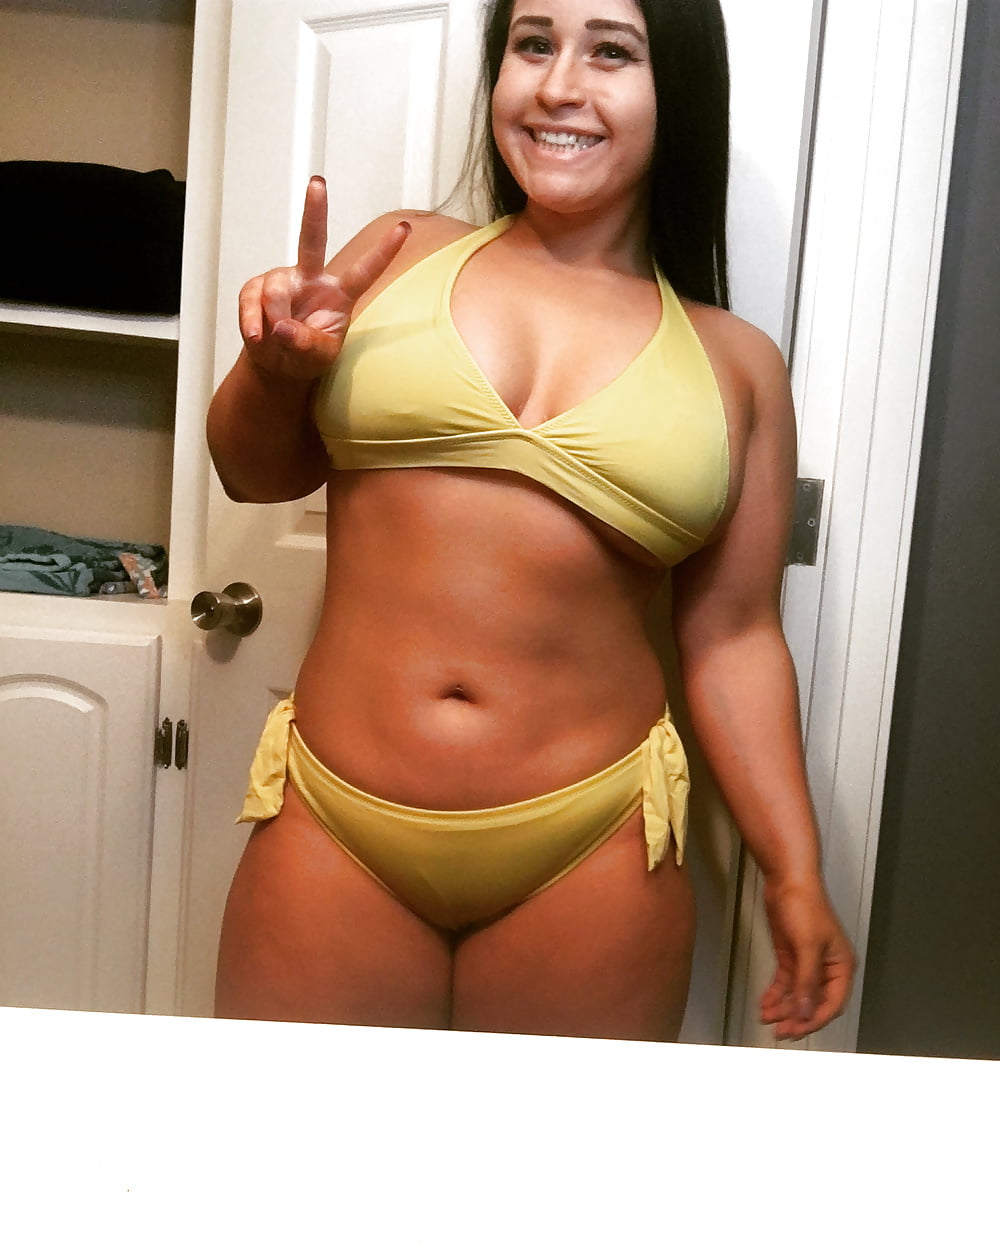 Jordynne Grace Sex Com - Jordynne Grace Bikini Selfies - 2 Pics | xHamster